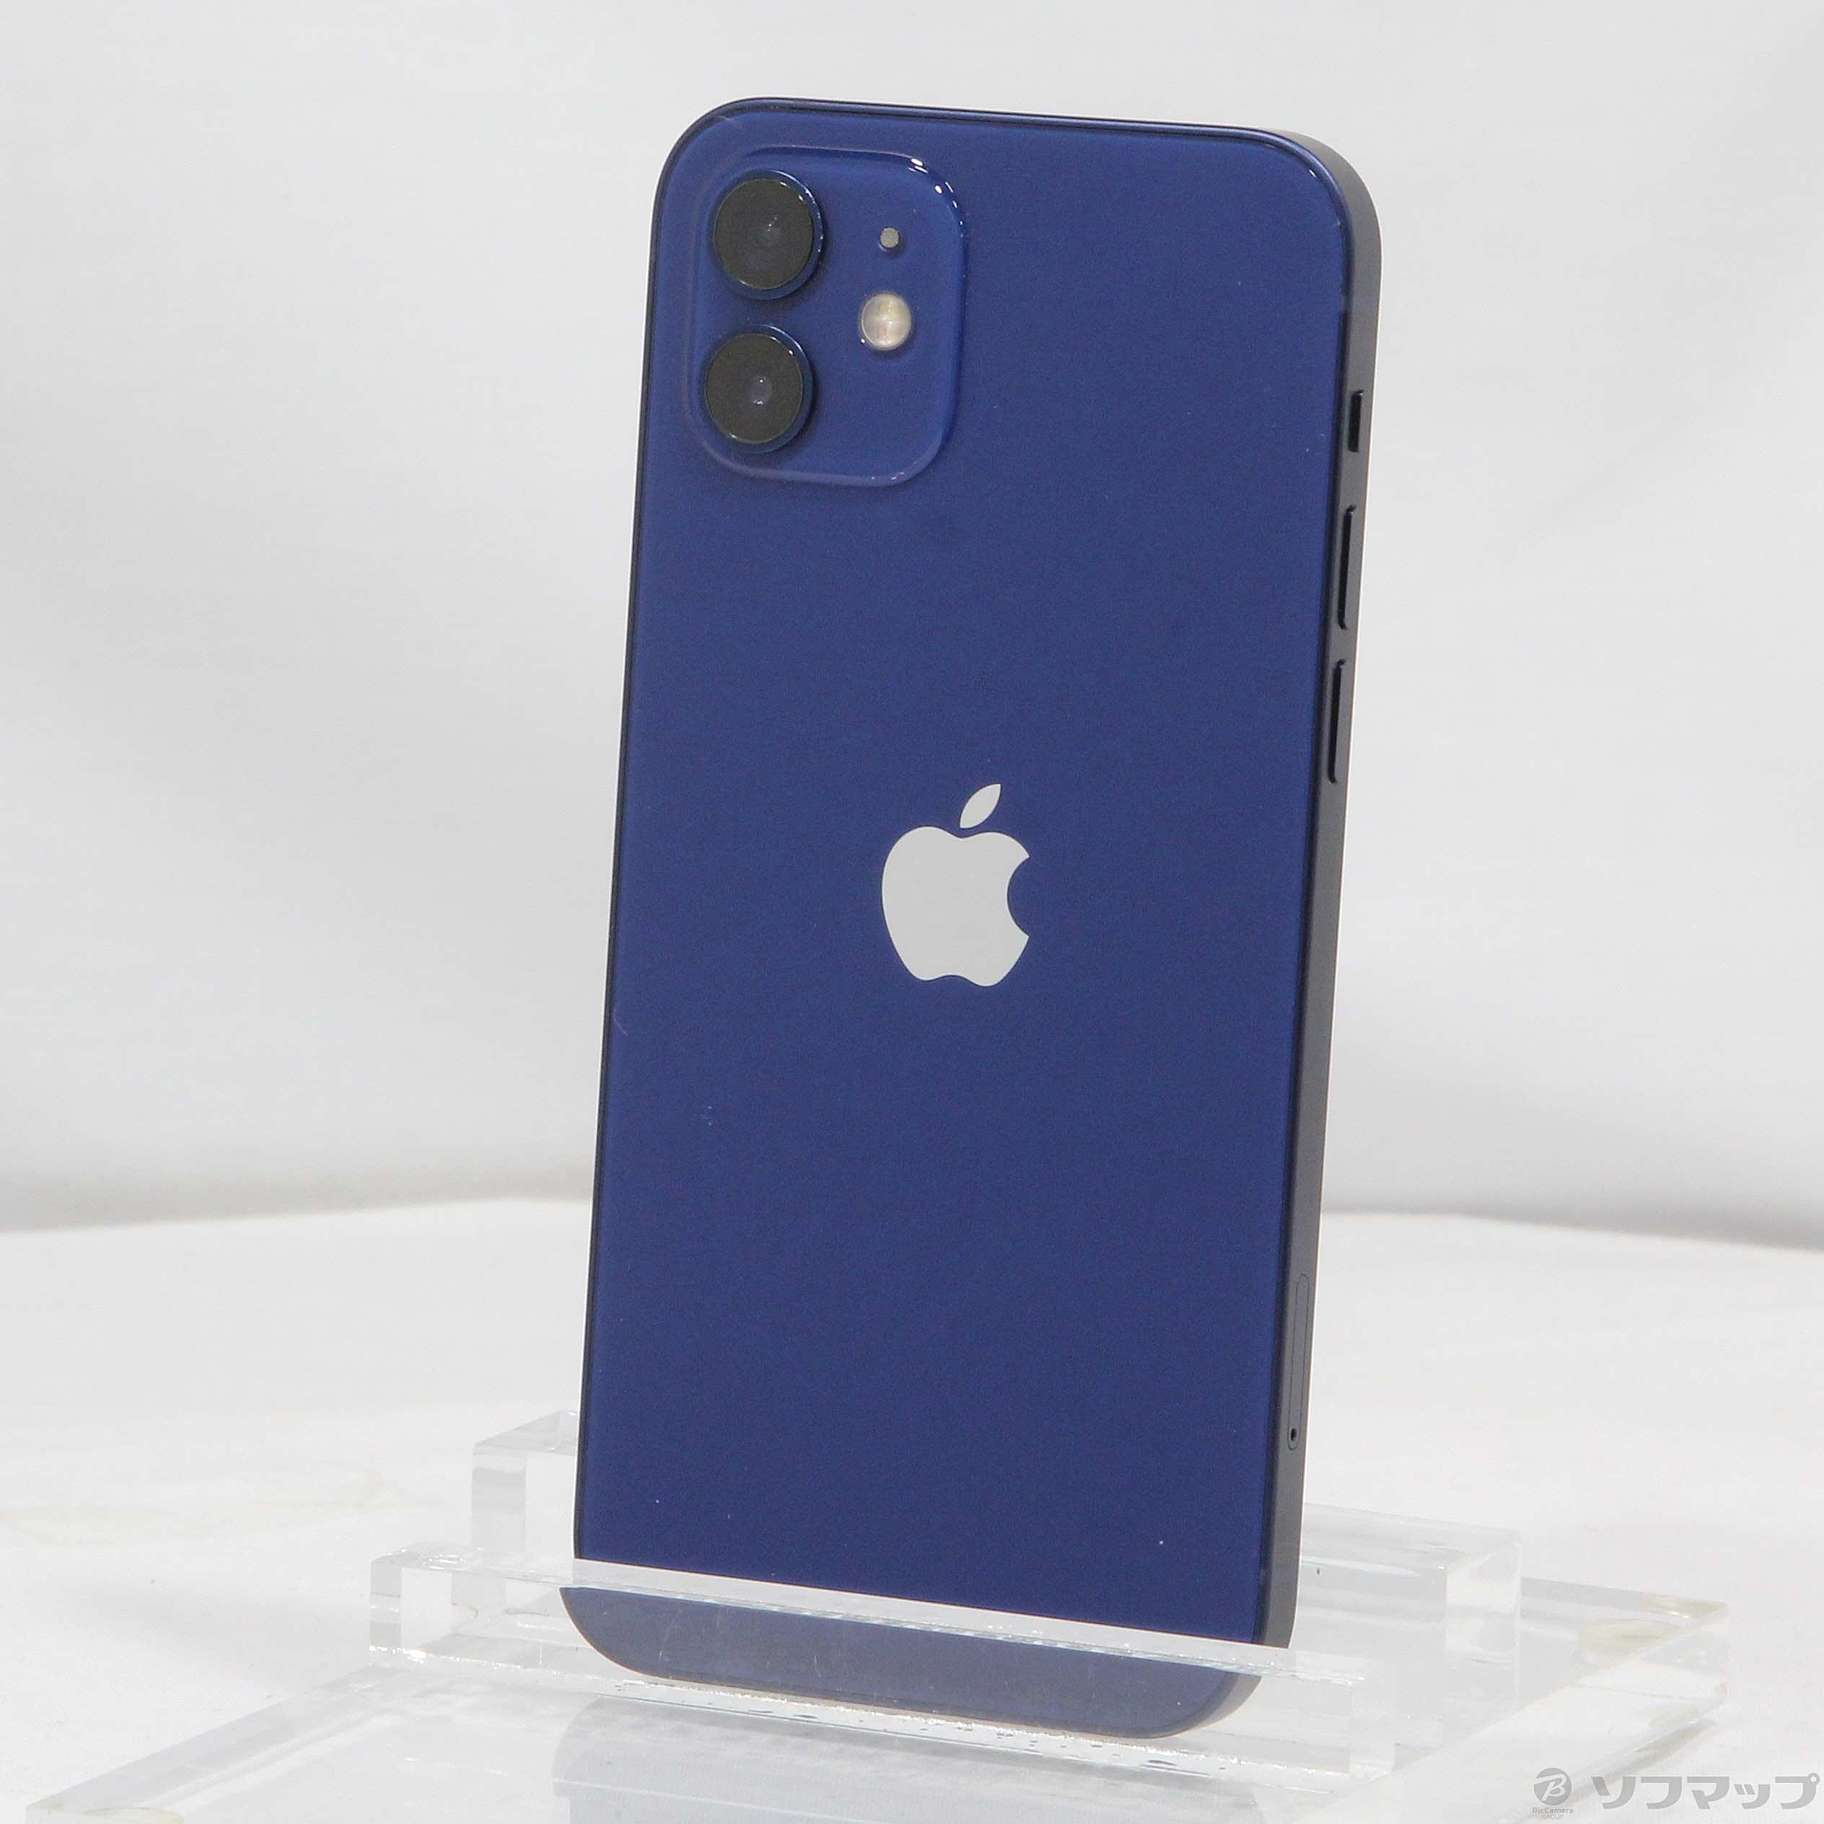 iPhone 12 64GB SIMフリー [ブルー] 中古(白ロム)価格比較 - 価格.com